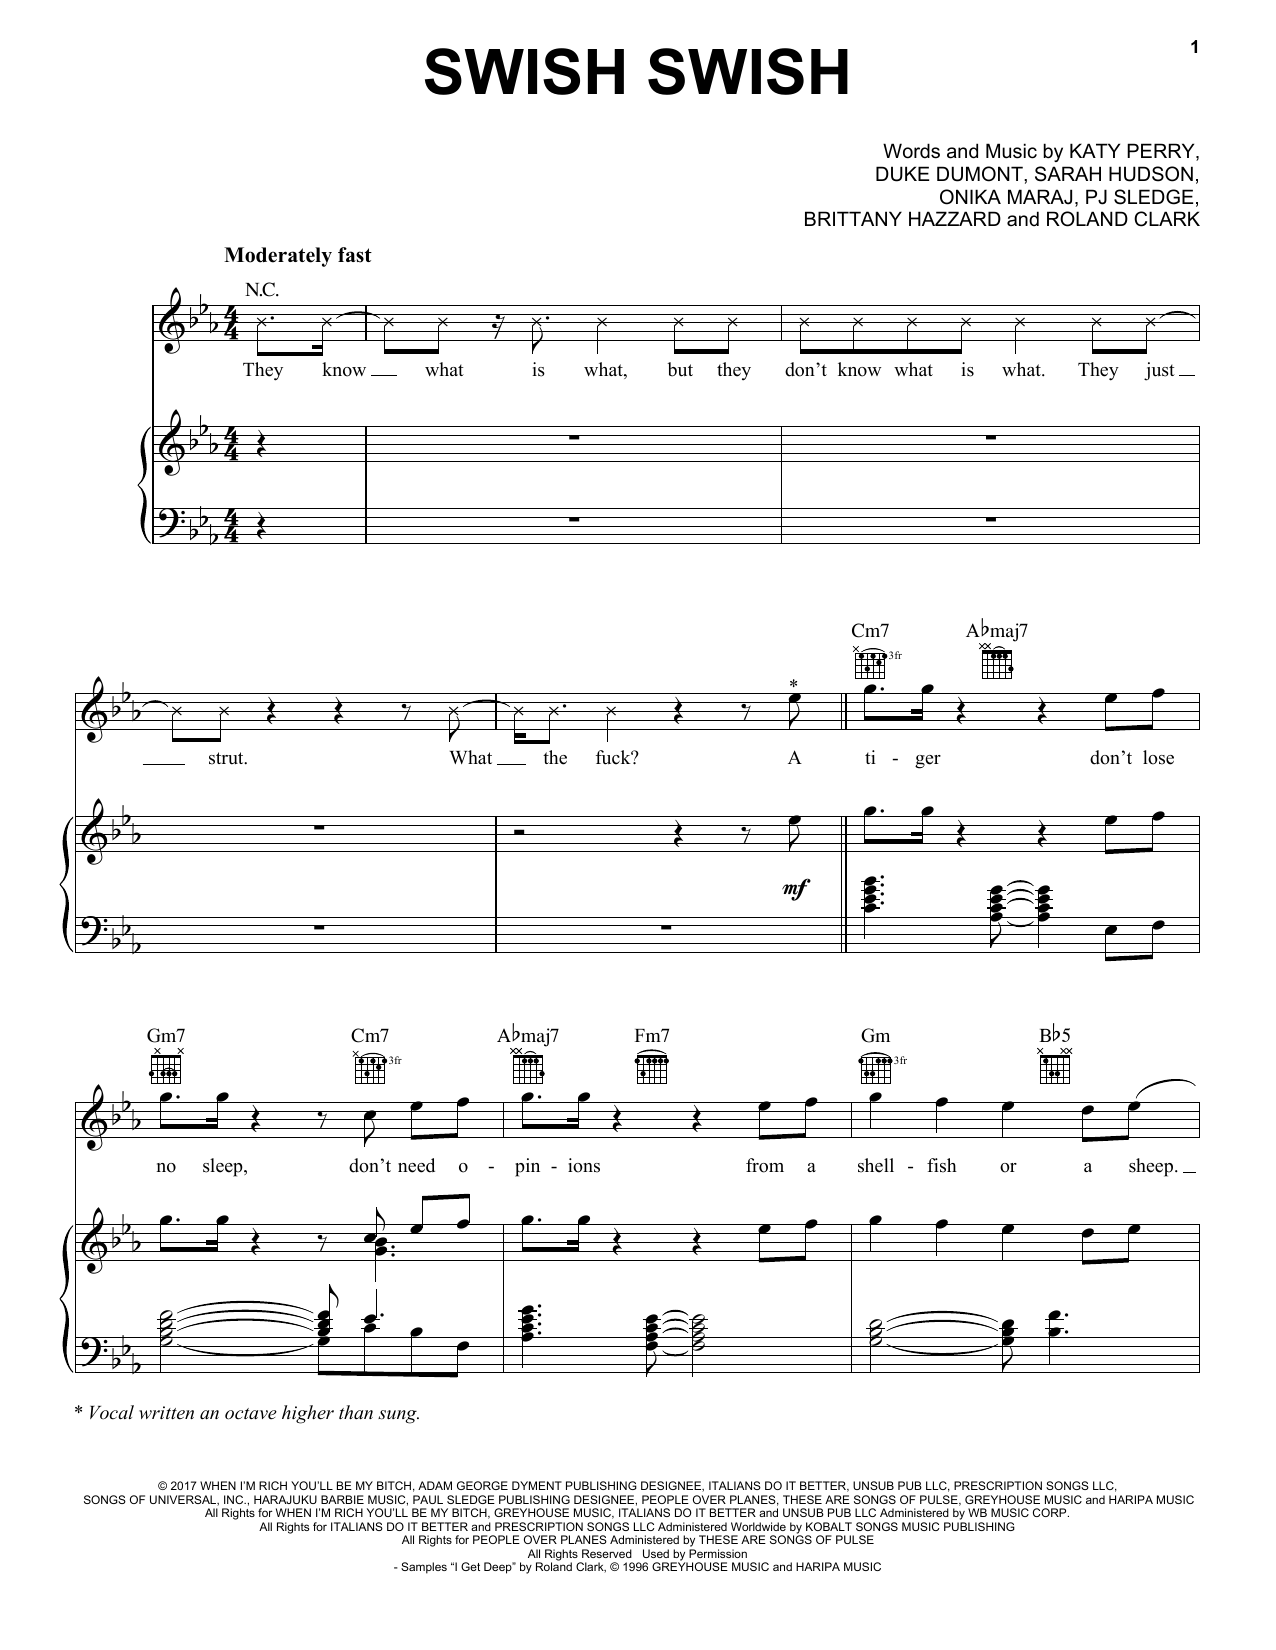 Katy Perry feat. Nicki Minaj Swish Swish Sheet Music Notes & Chords for Easy Piano - Download or Print PDF